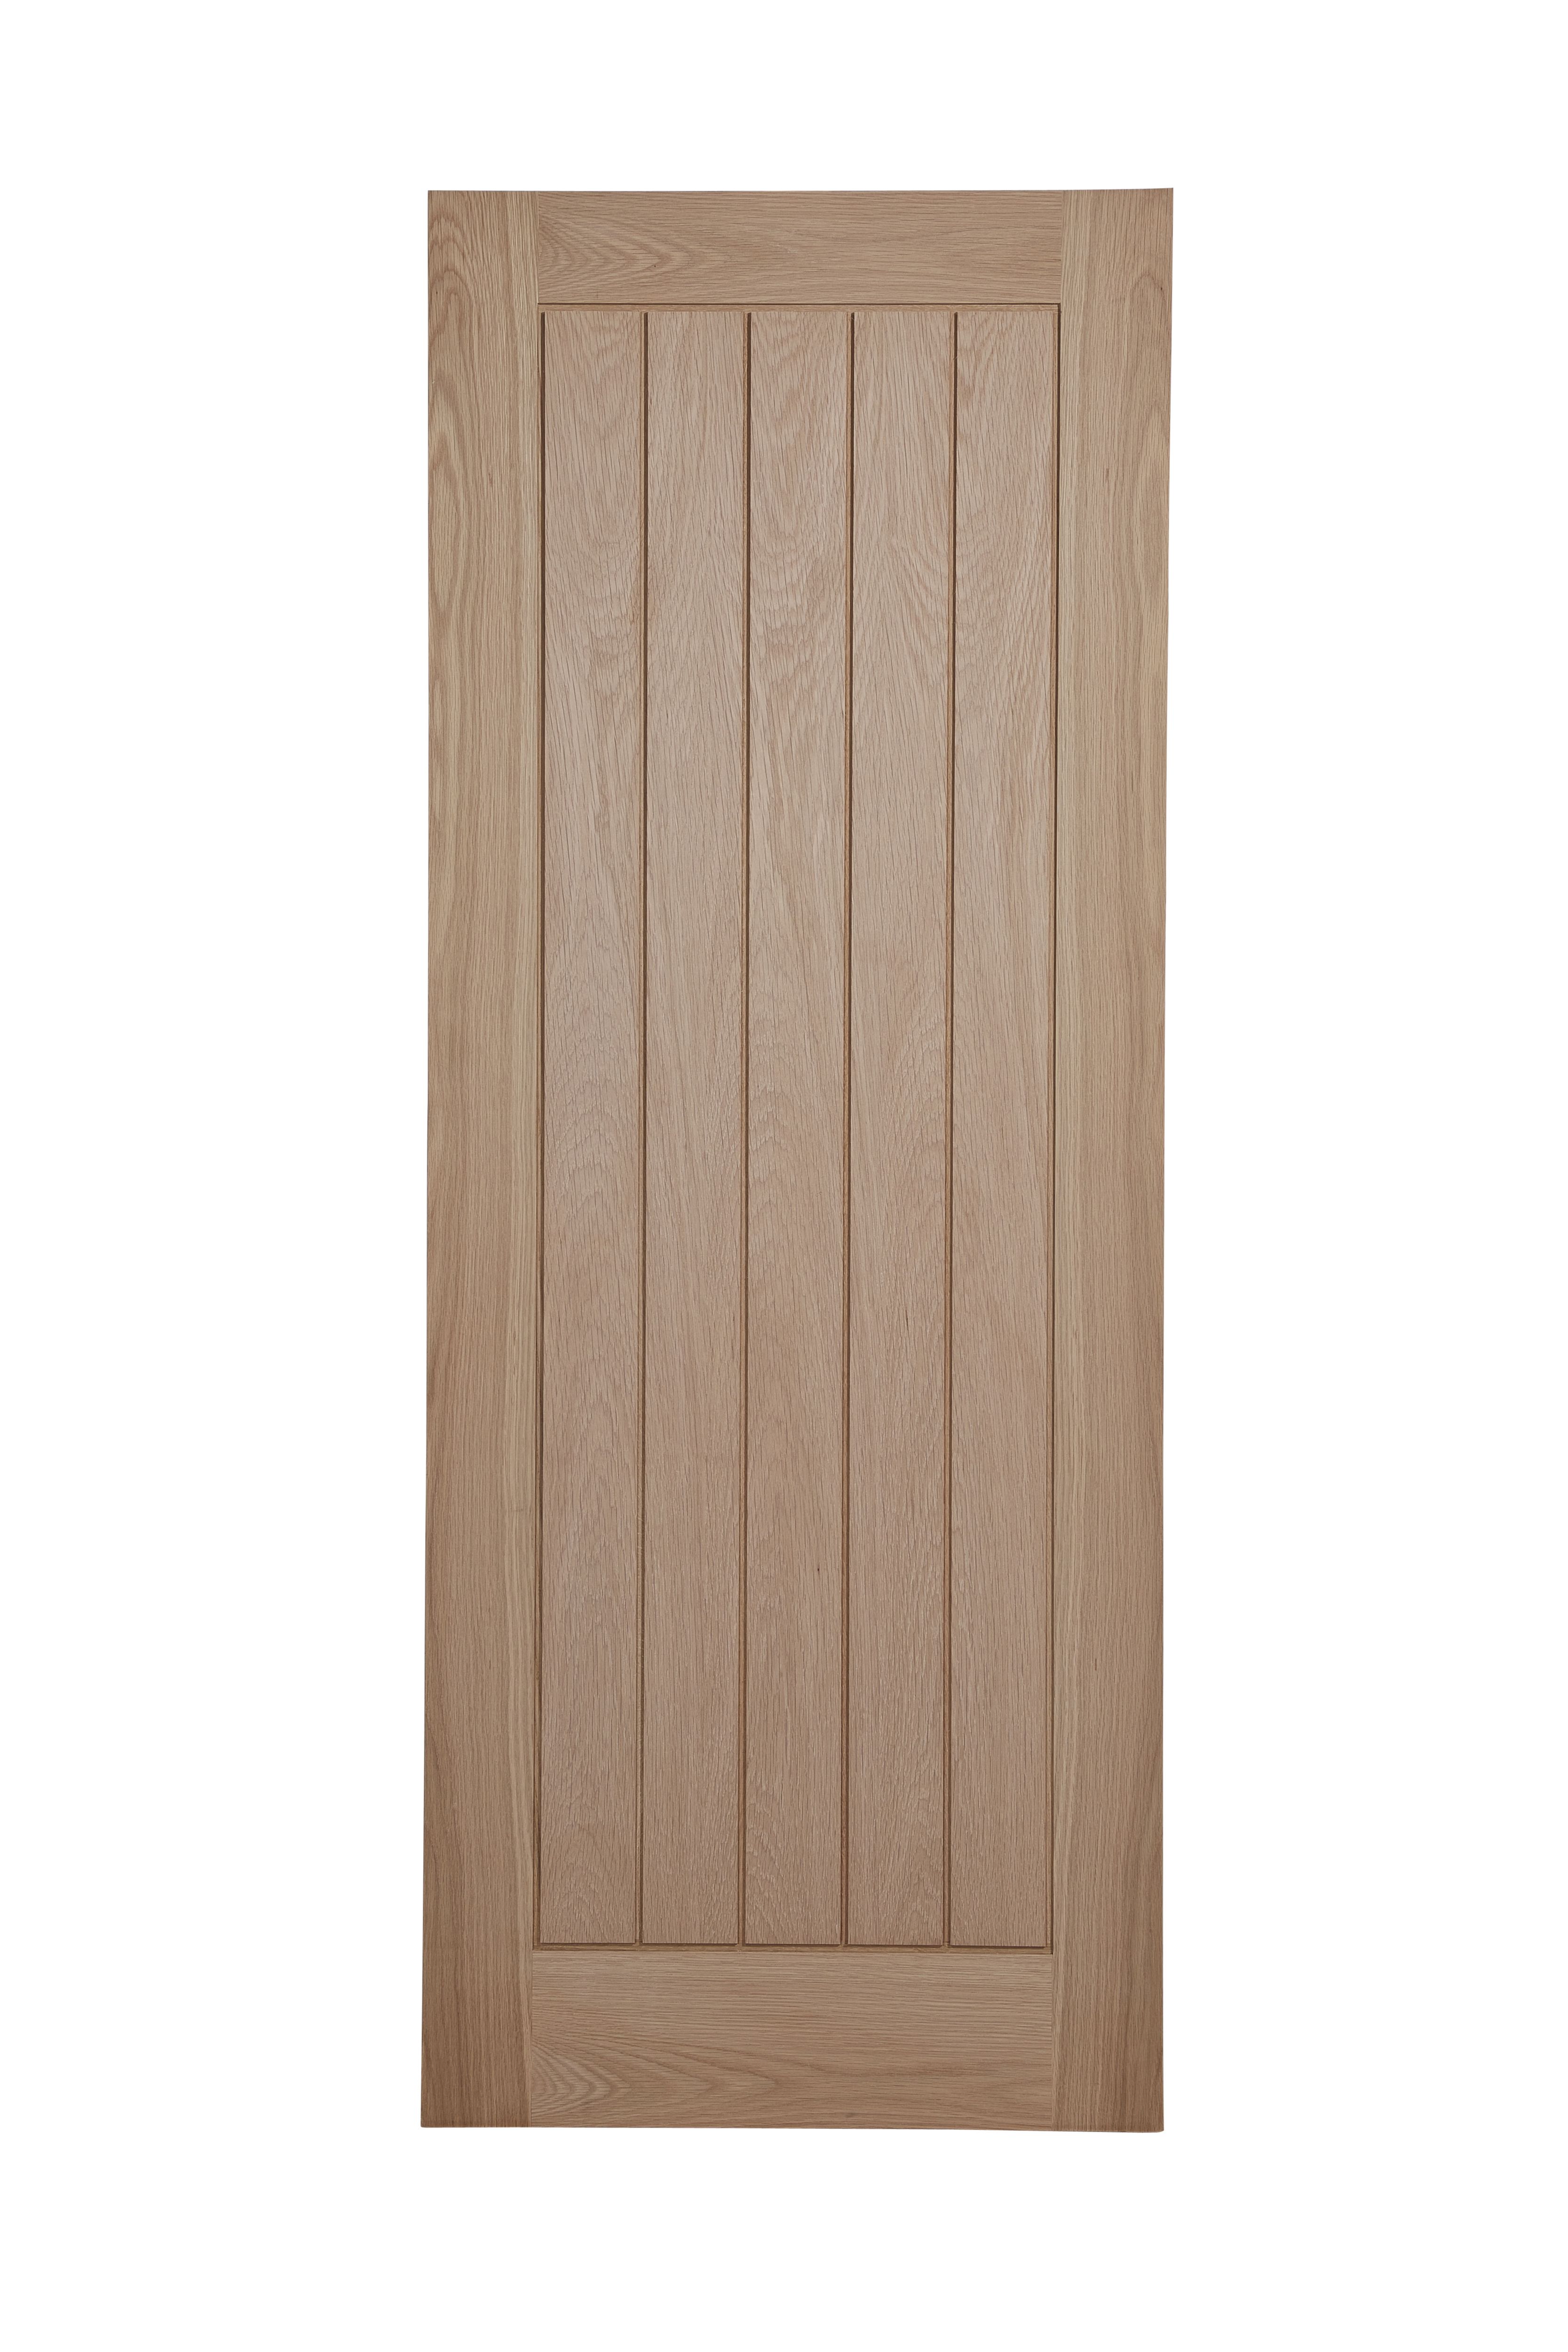 Unglazed Cottage Oak veneer Internal Fire door, (H)1981mm (W)686mm (T)44mm